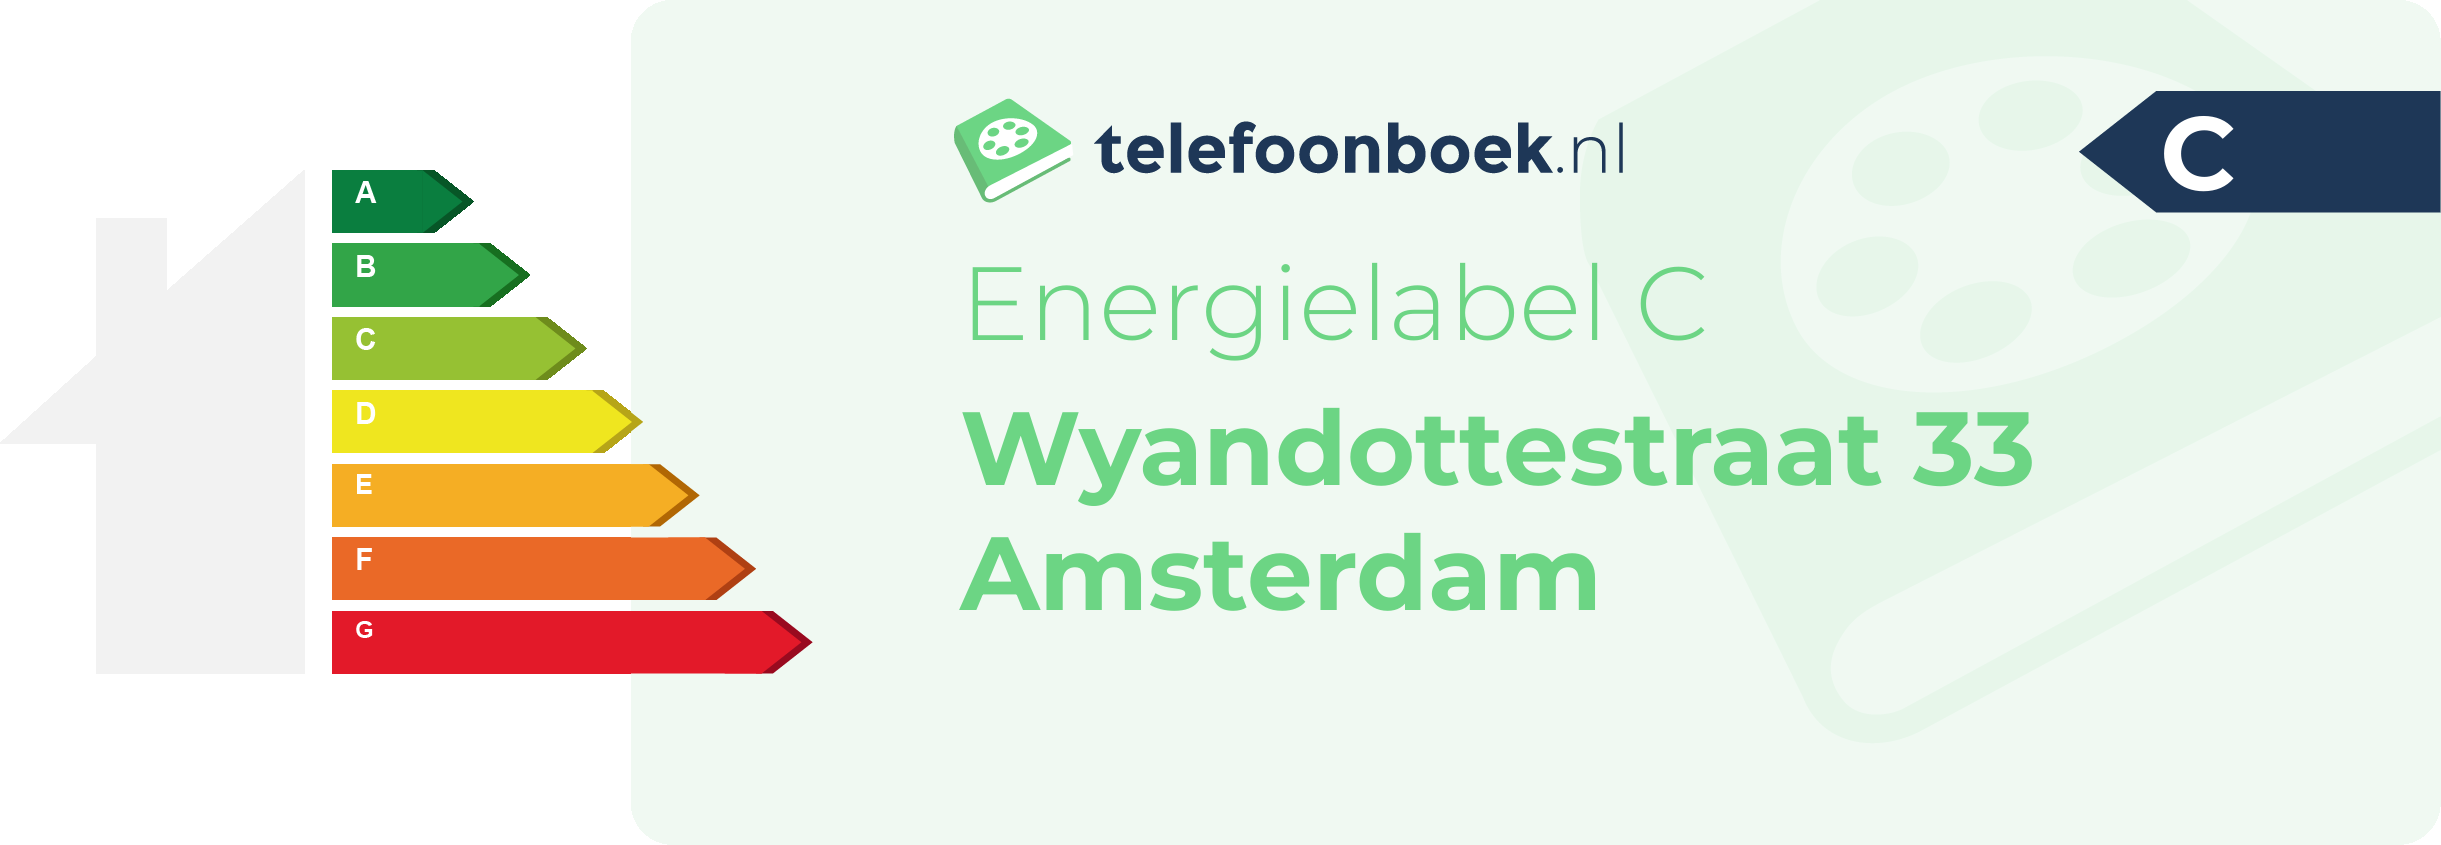 Energielabel Wyandottestraat 33 Amsterdam